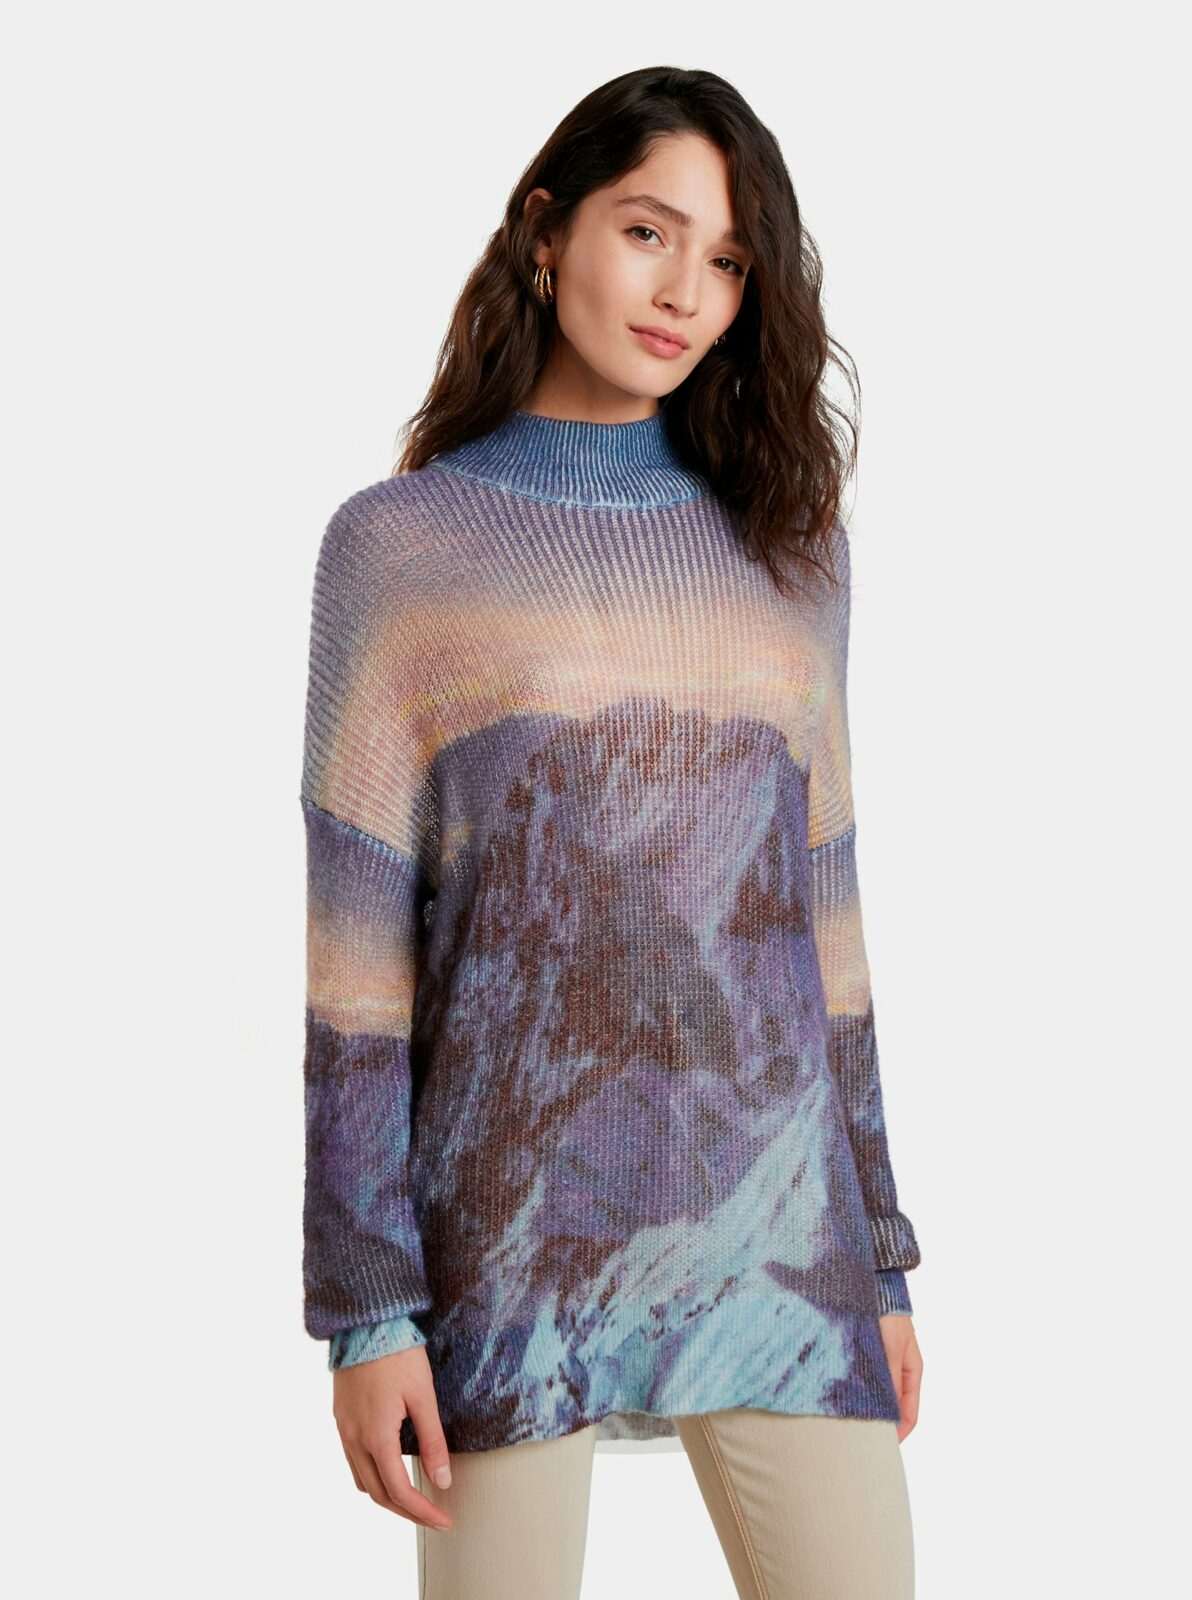 Modrý dámský vzorovaný svetr s příměsí vlny